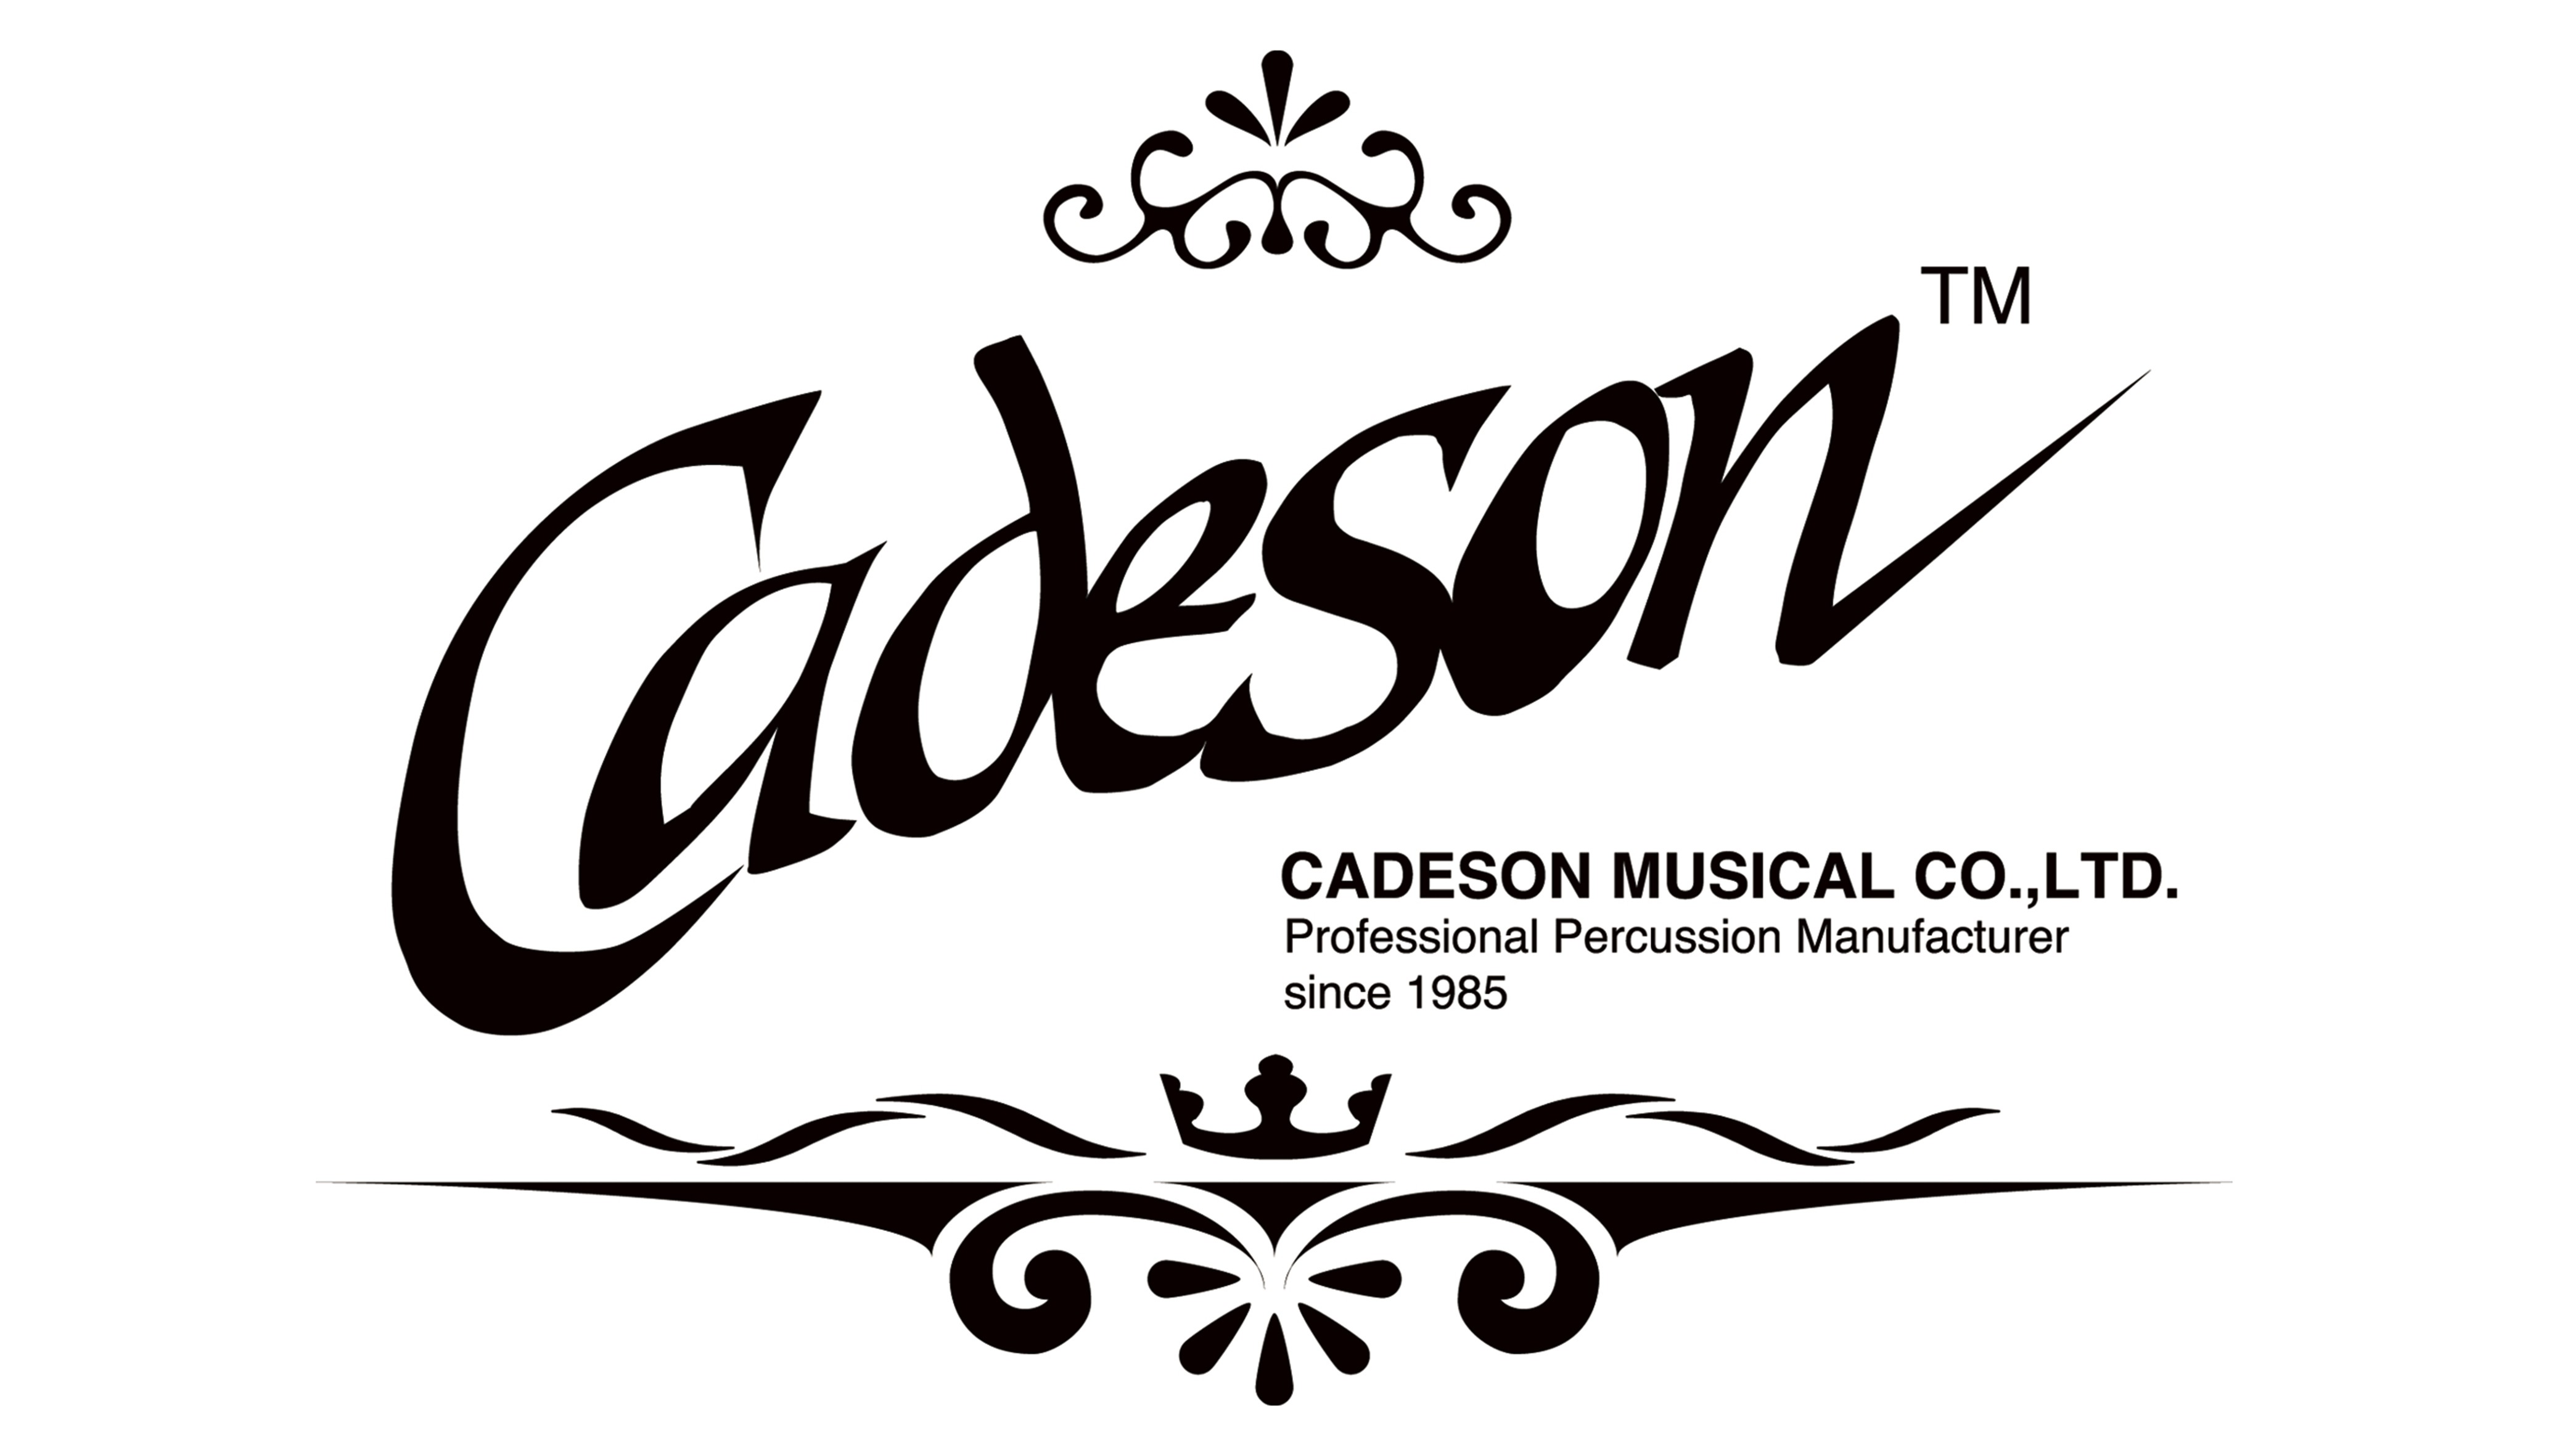 CADESON